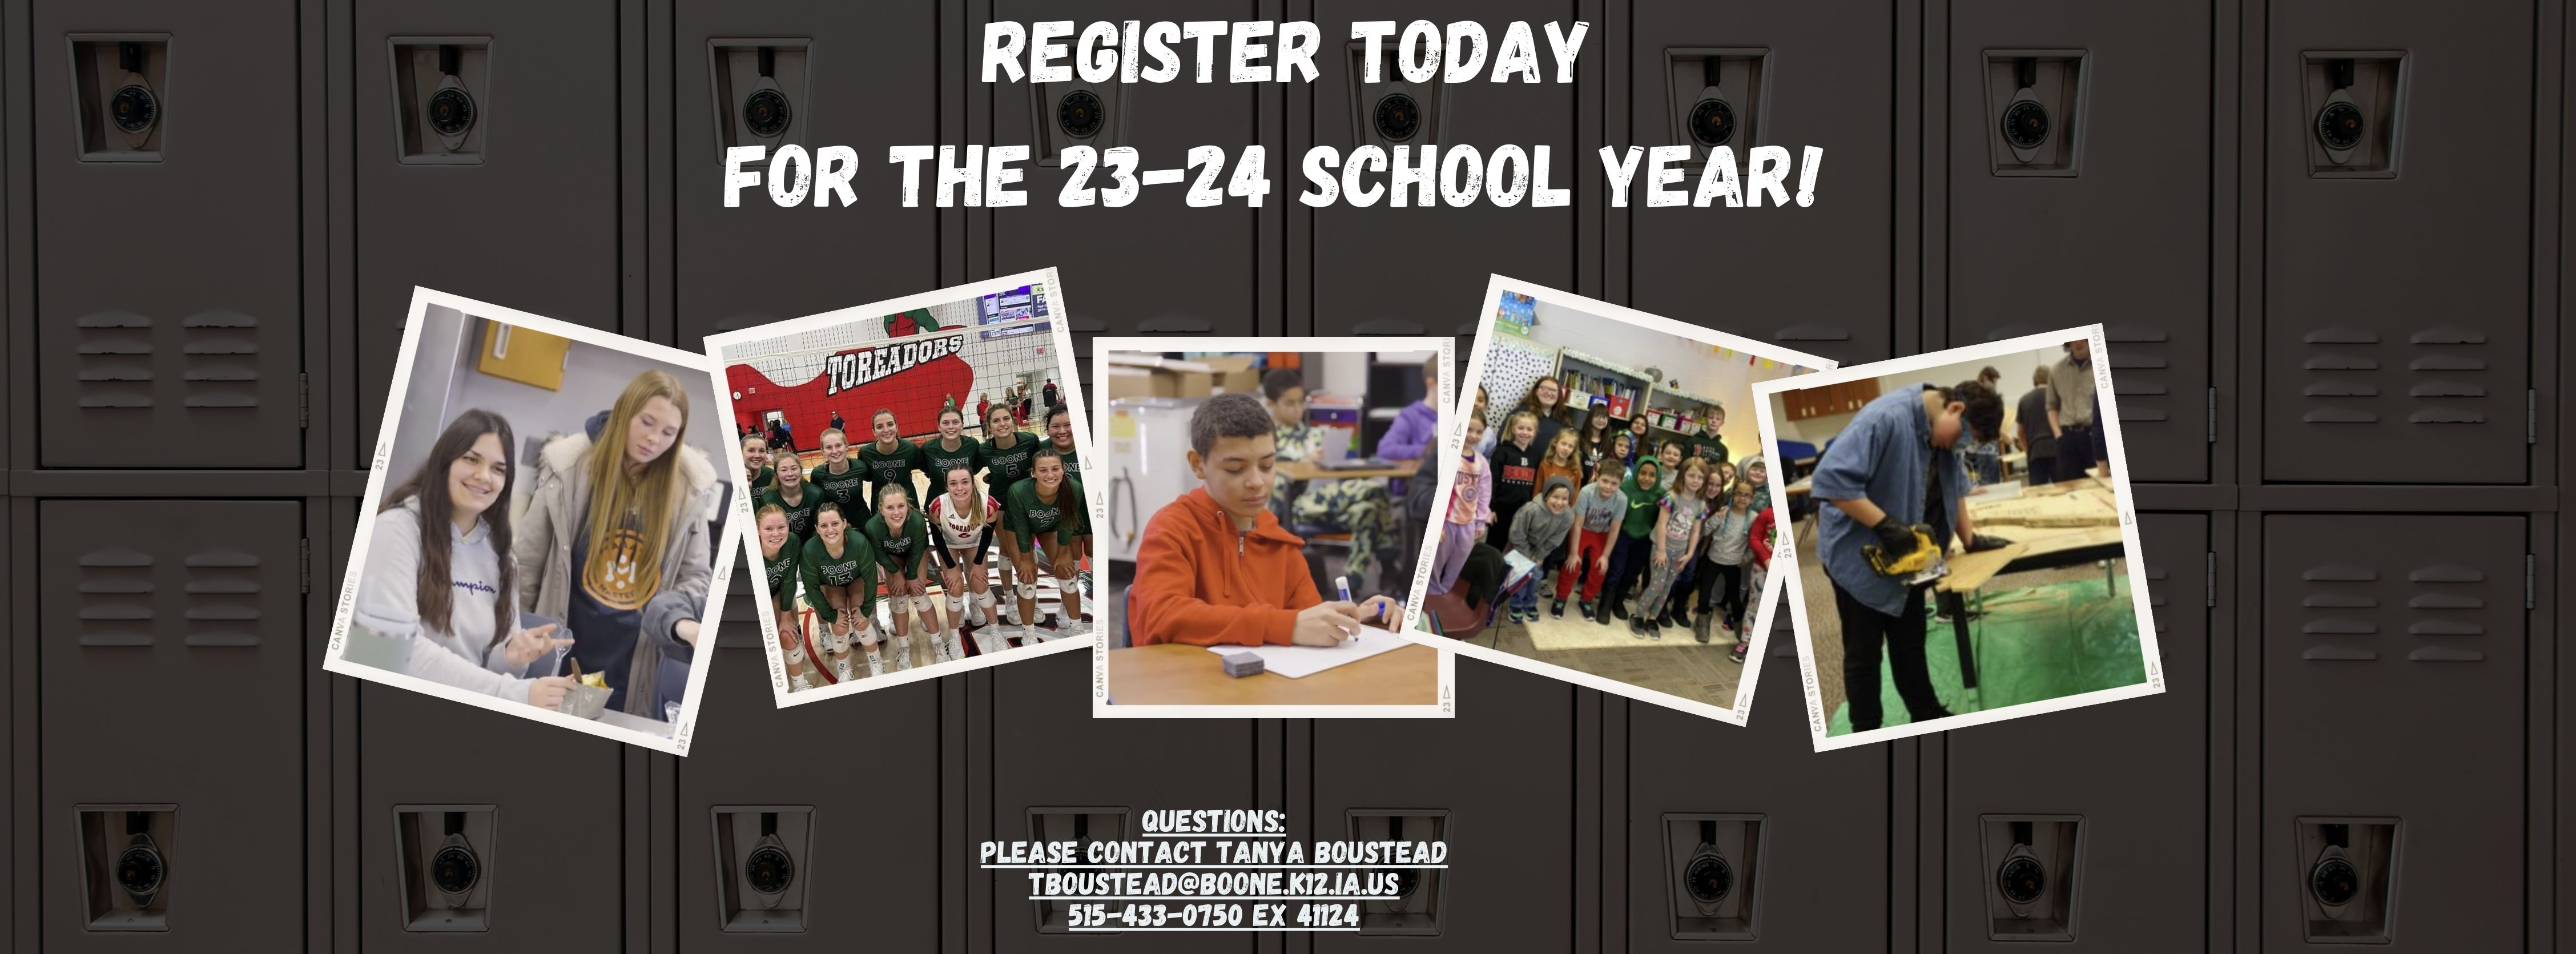 Banner image encouraging registration for 23-24 school year